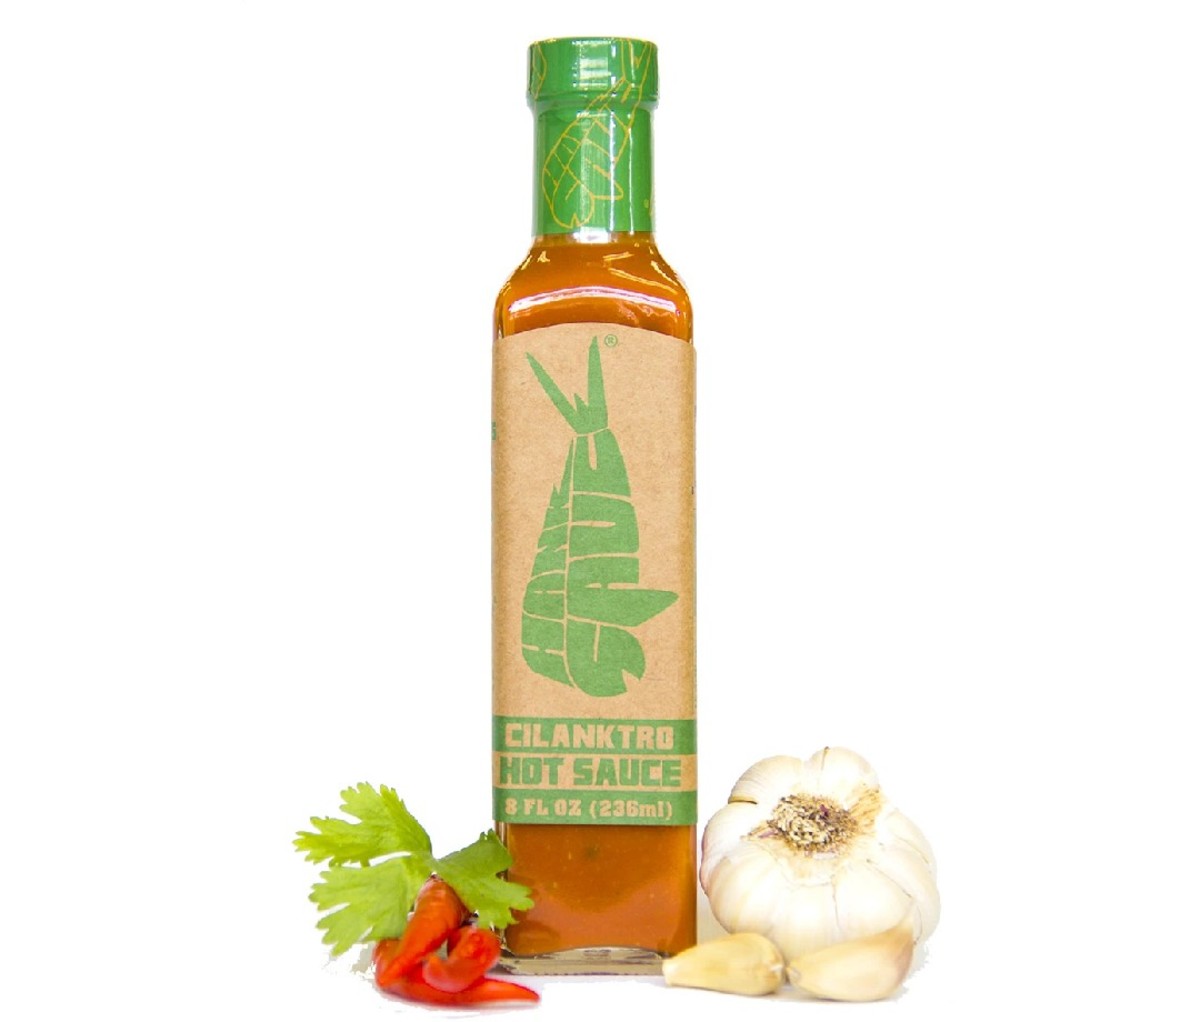 Bottle of Hank Sauce Cilanktro sauce beside a garlic bulb and hot red pepper garnish